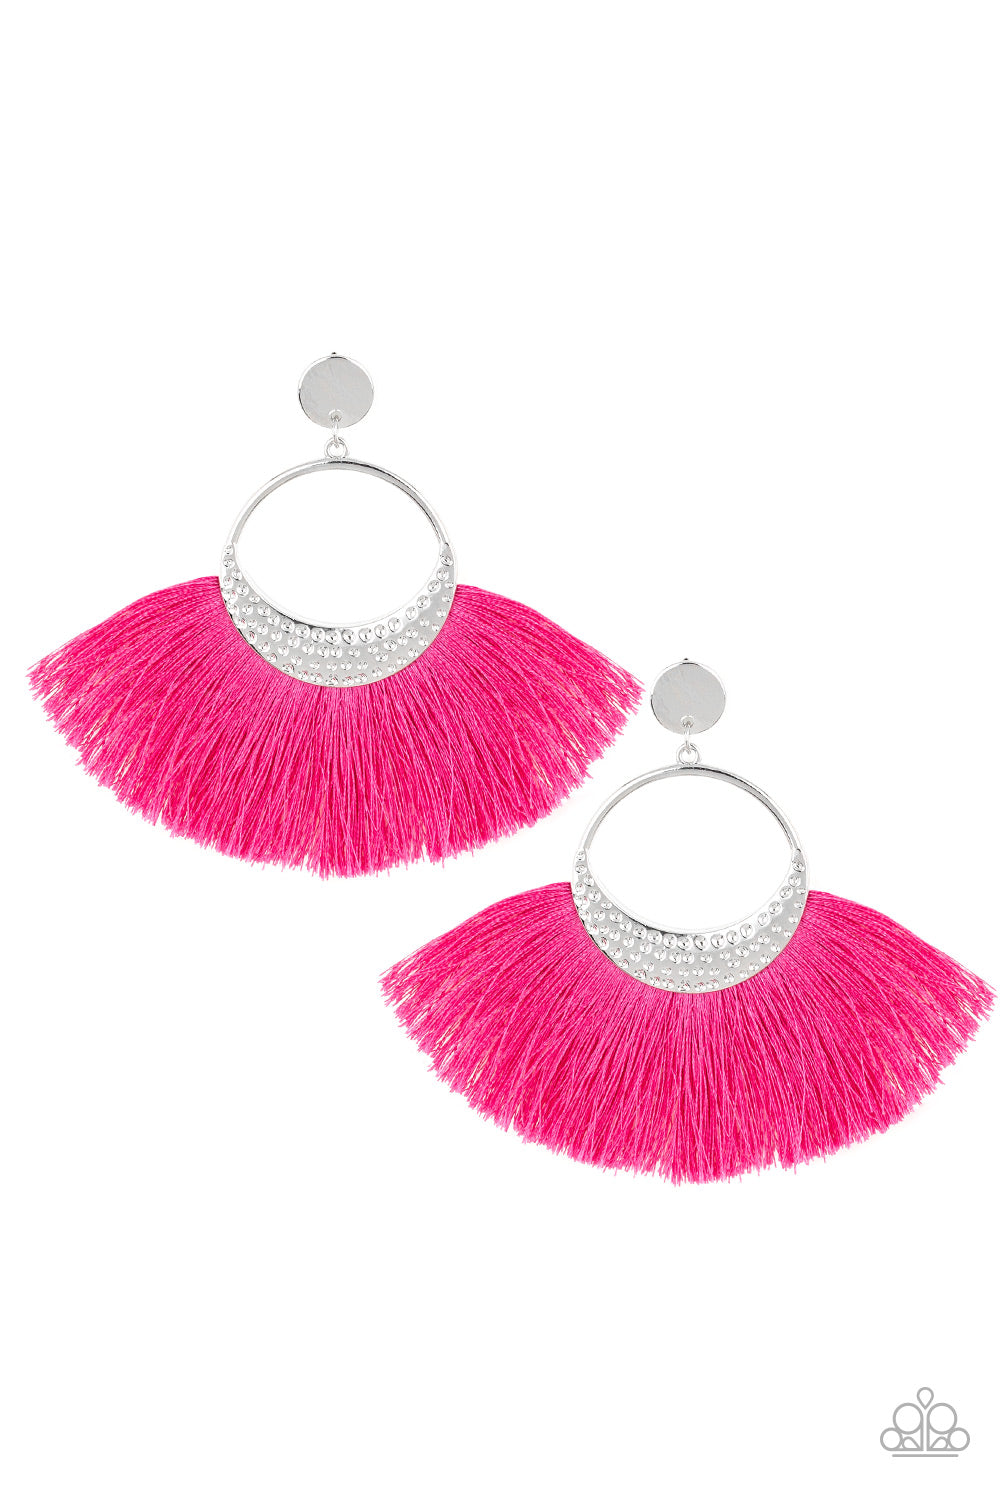 Spartan Spirit Pink Paparazzi Earrings Cashmere Pink Jewels - Cashmere Pink Jewels & Accessories, Cashmere Pink Jewels & Accessories - Paparazzi